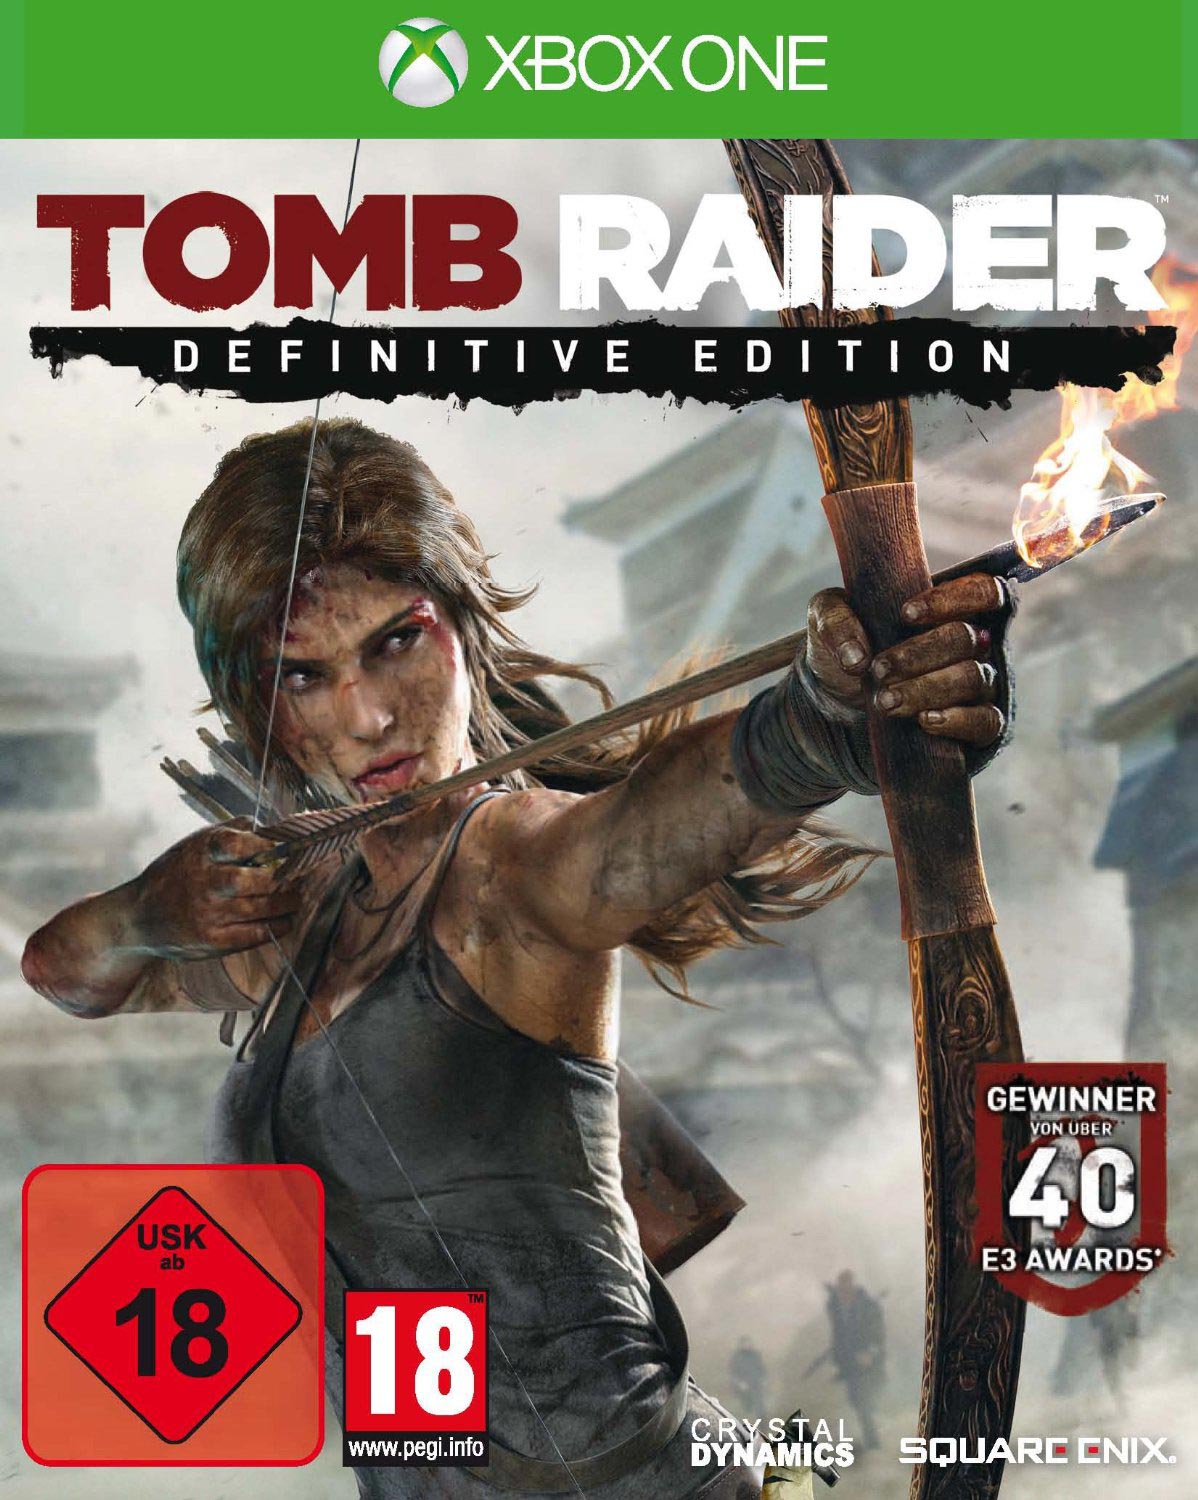 Tomb raider ps4 купить. Tomb Raider Xbox one. Томб Райдер на хвох. Томб Райдер 4 на Xbox. Tomb Raider Definitive Edition ps4.